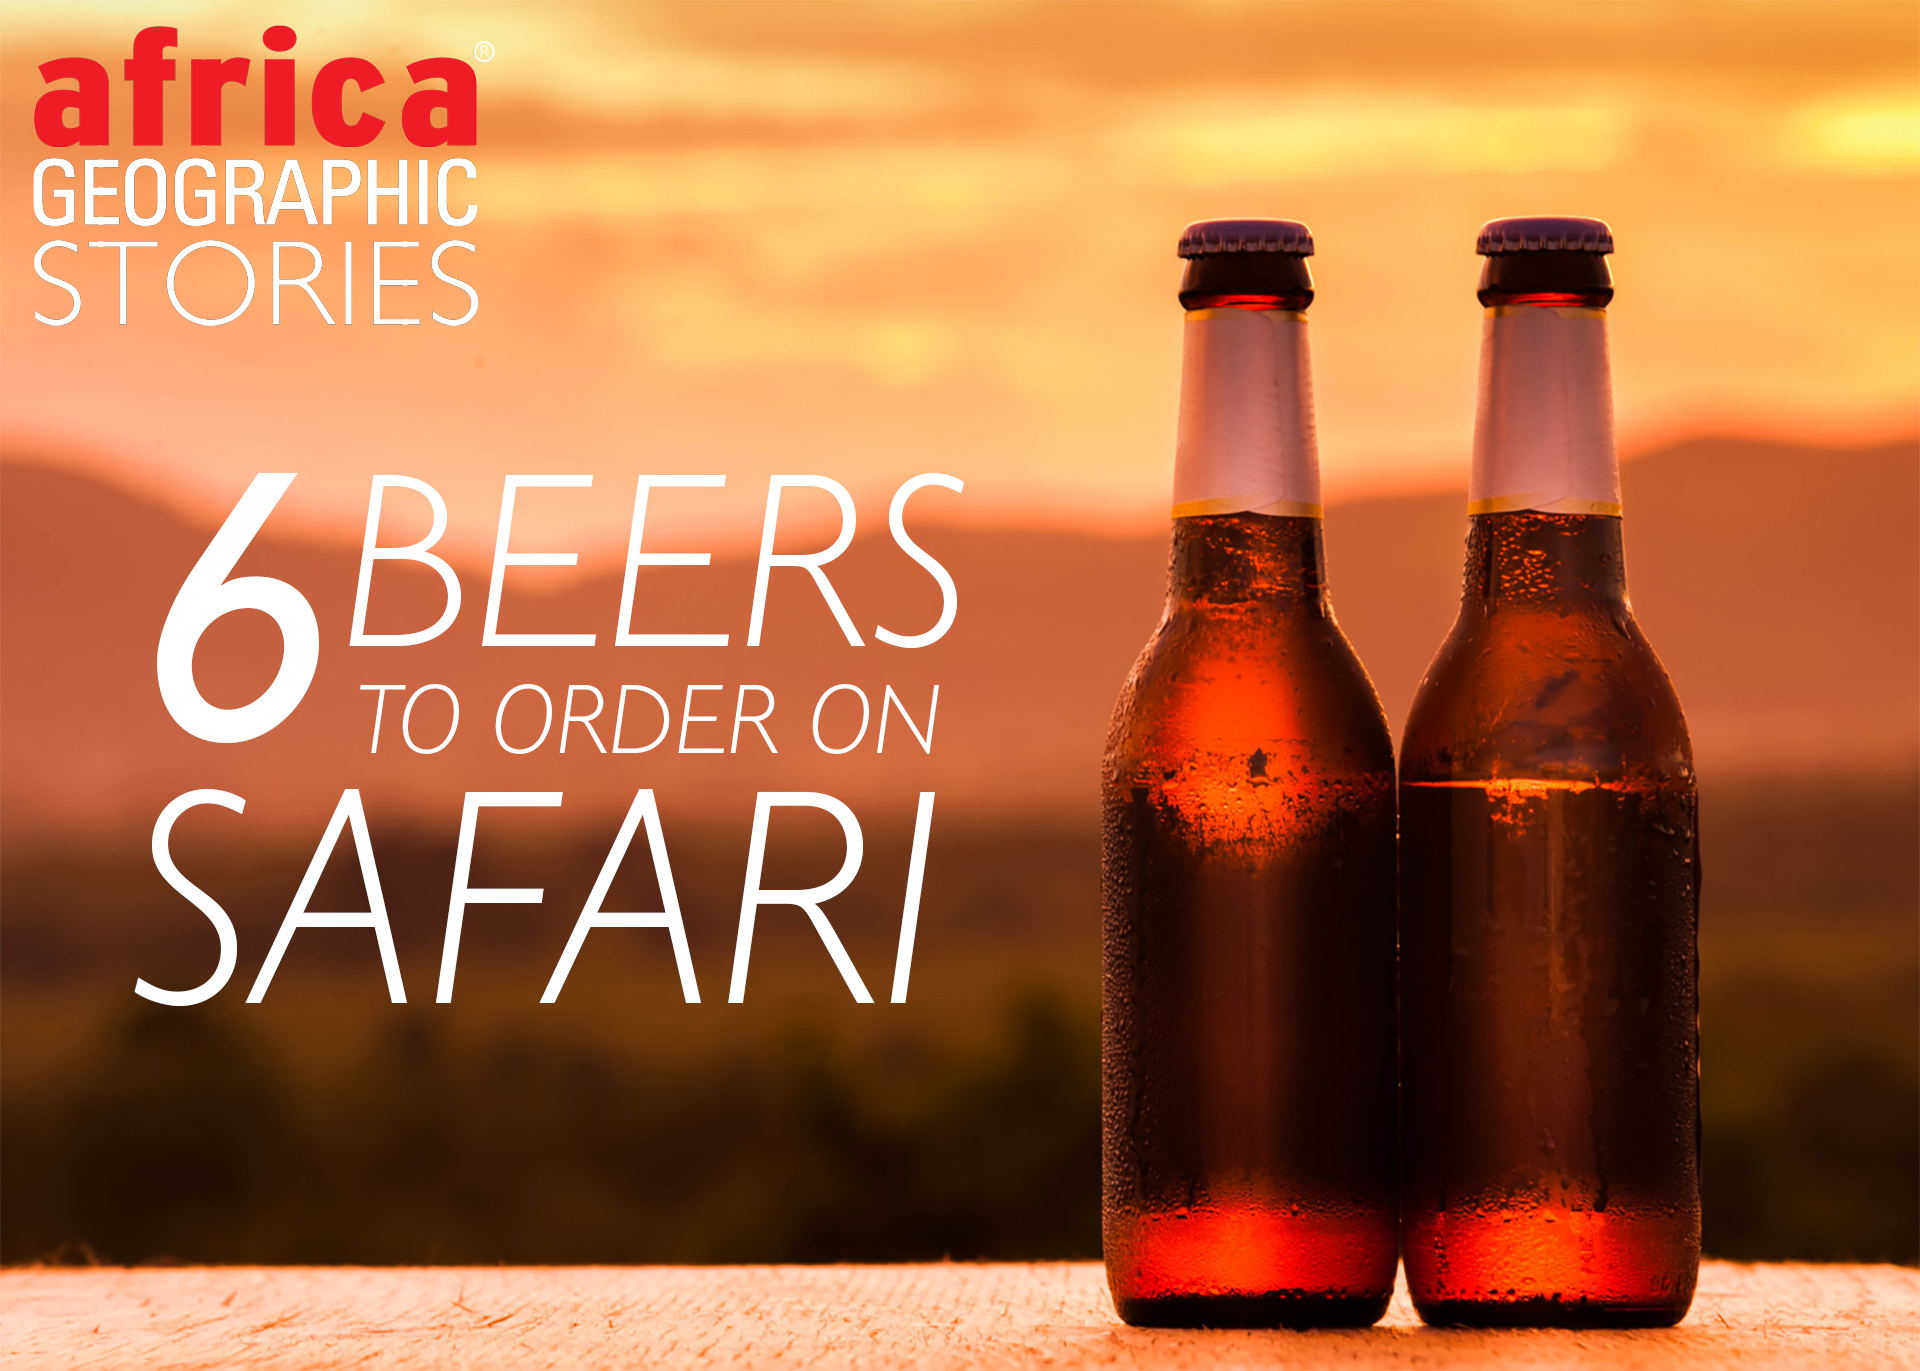 6 beers to order on safari